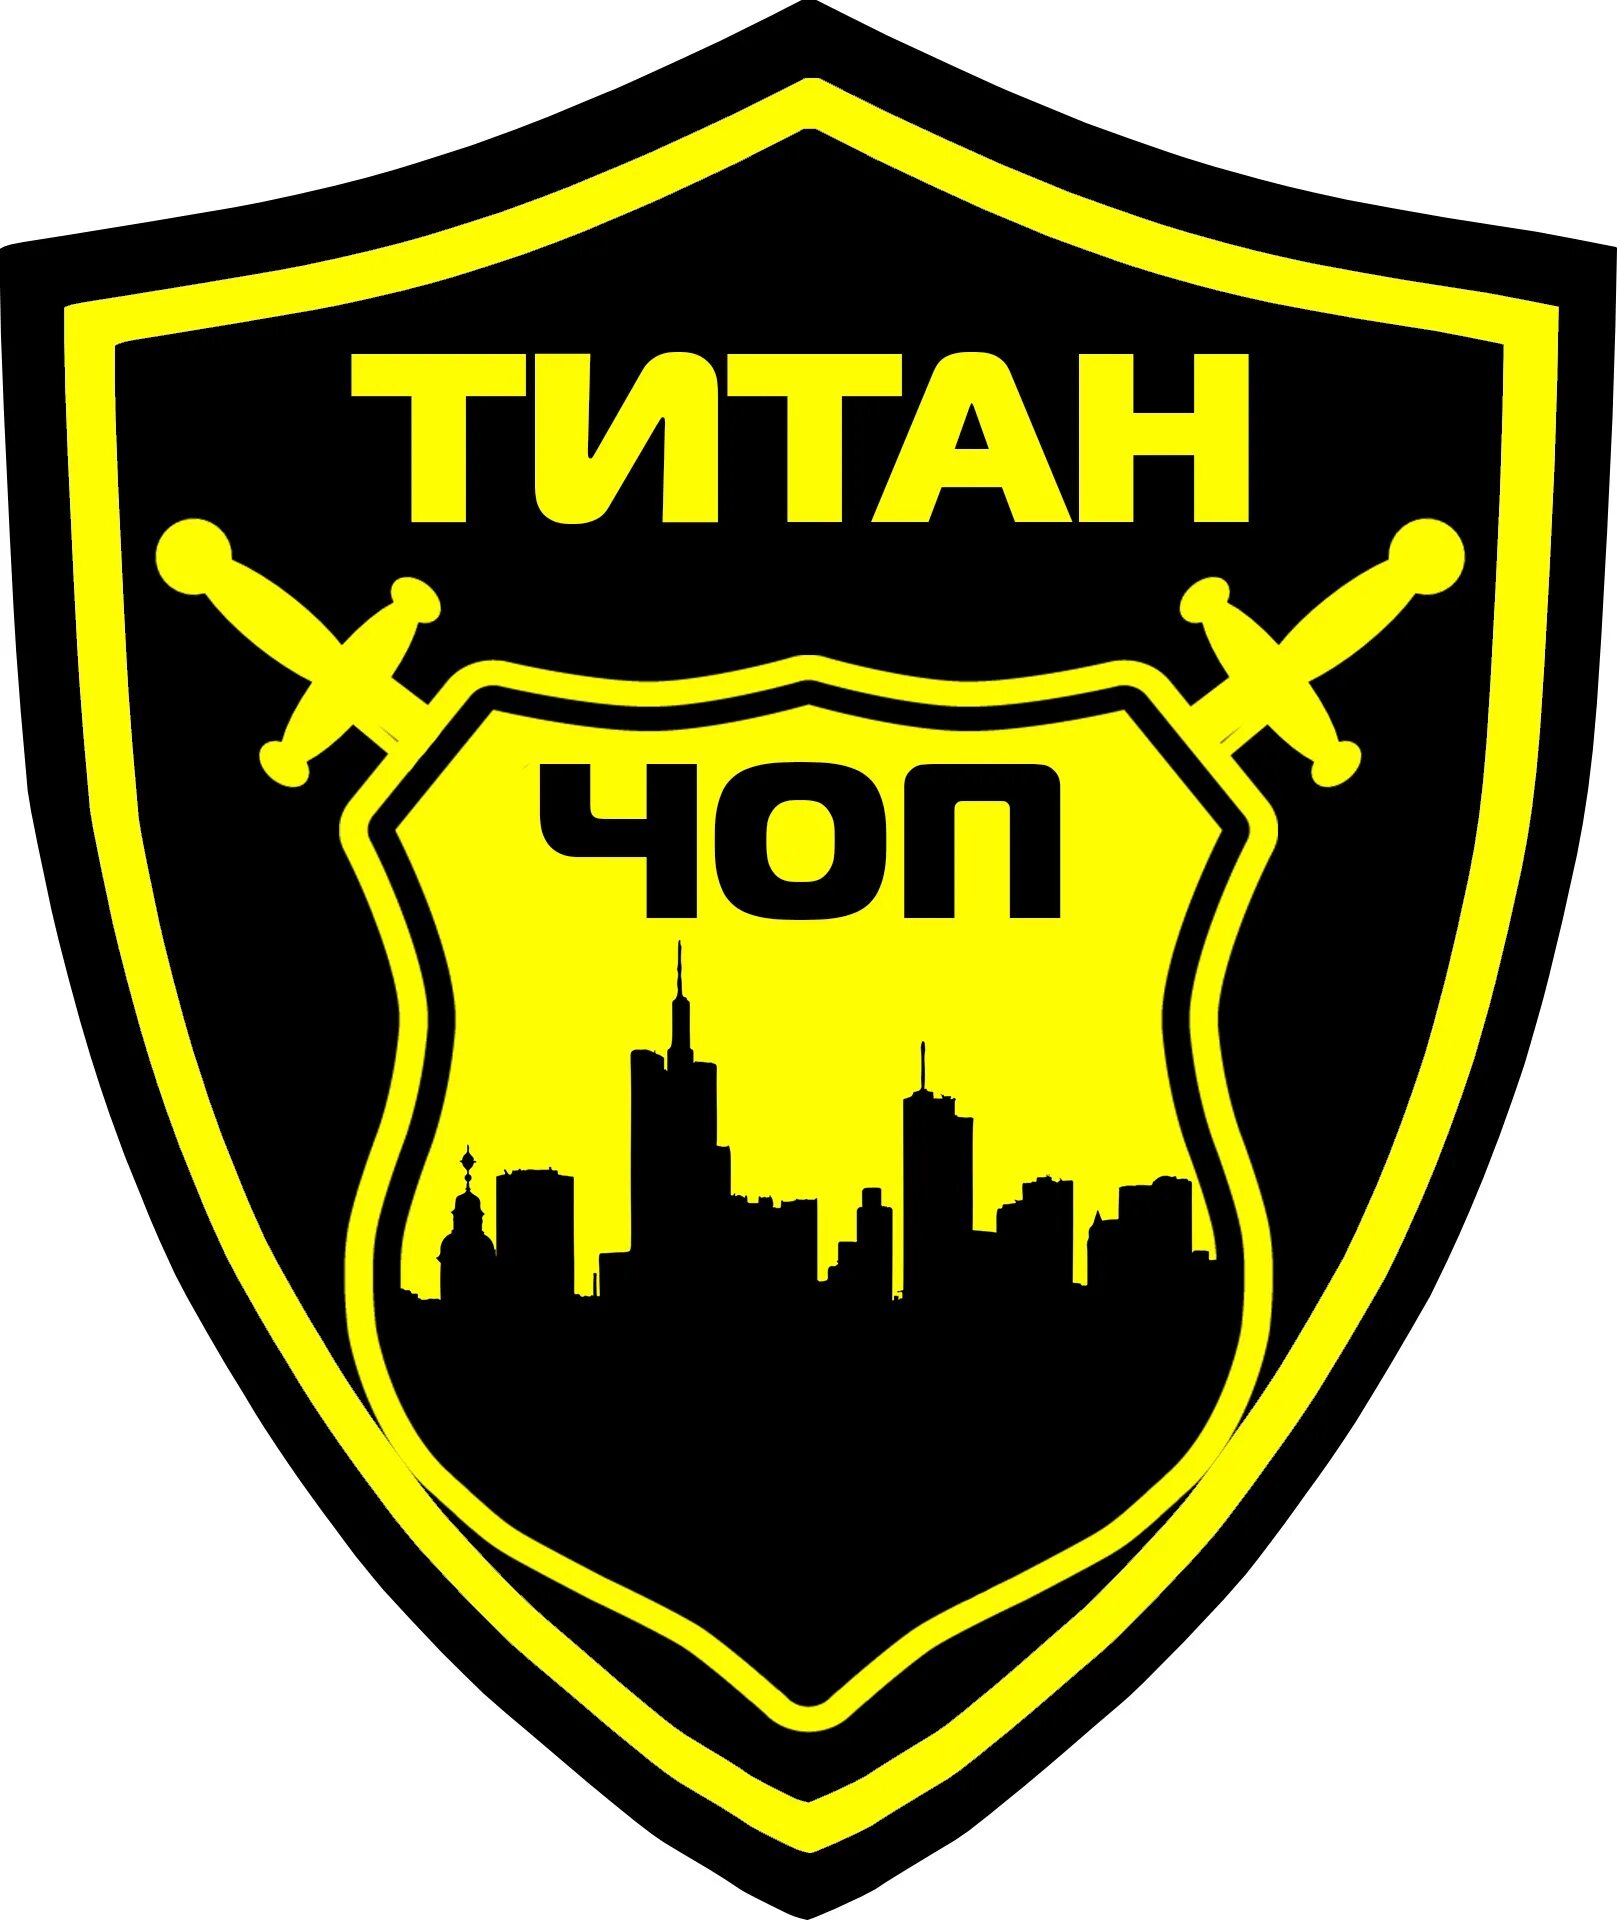 Чоп охрана Титан. Логотип охранного предприятия. Чоп Титан логотип. Частная охранная организация эмблема. Ооо частная охранная организация